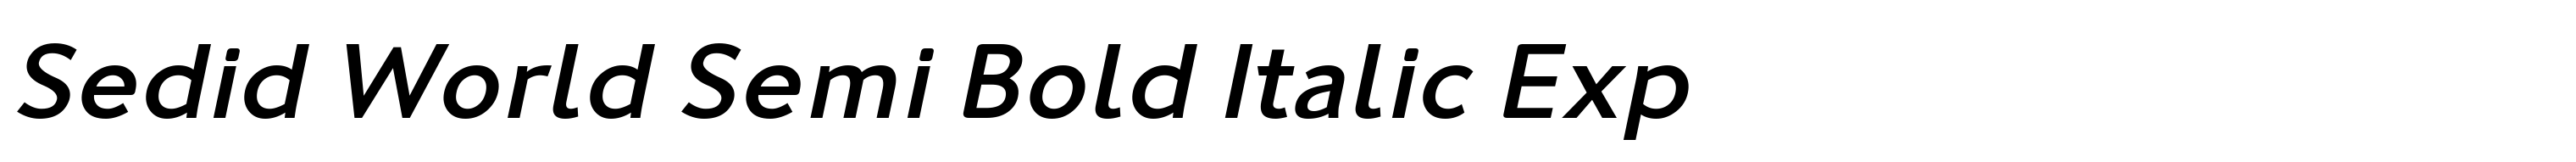 Sedid World Semi Bold Italic Exp